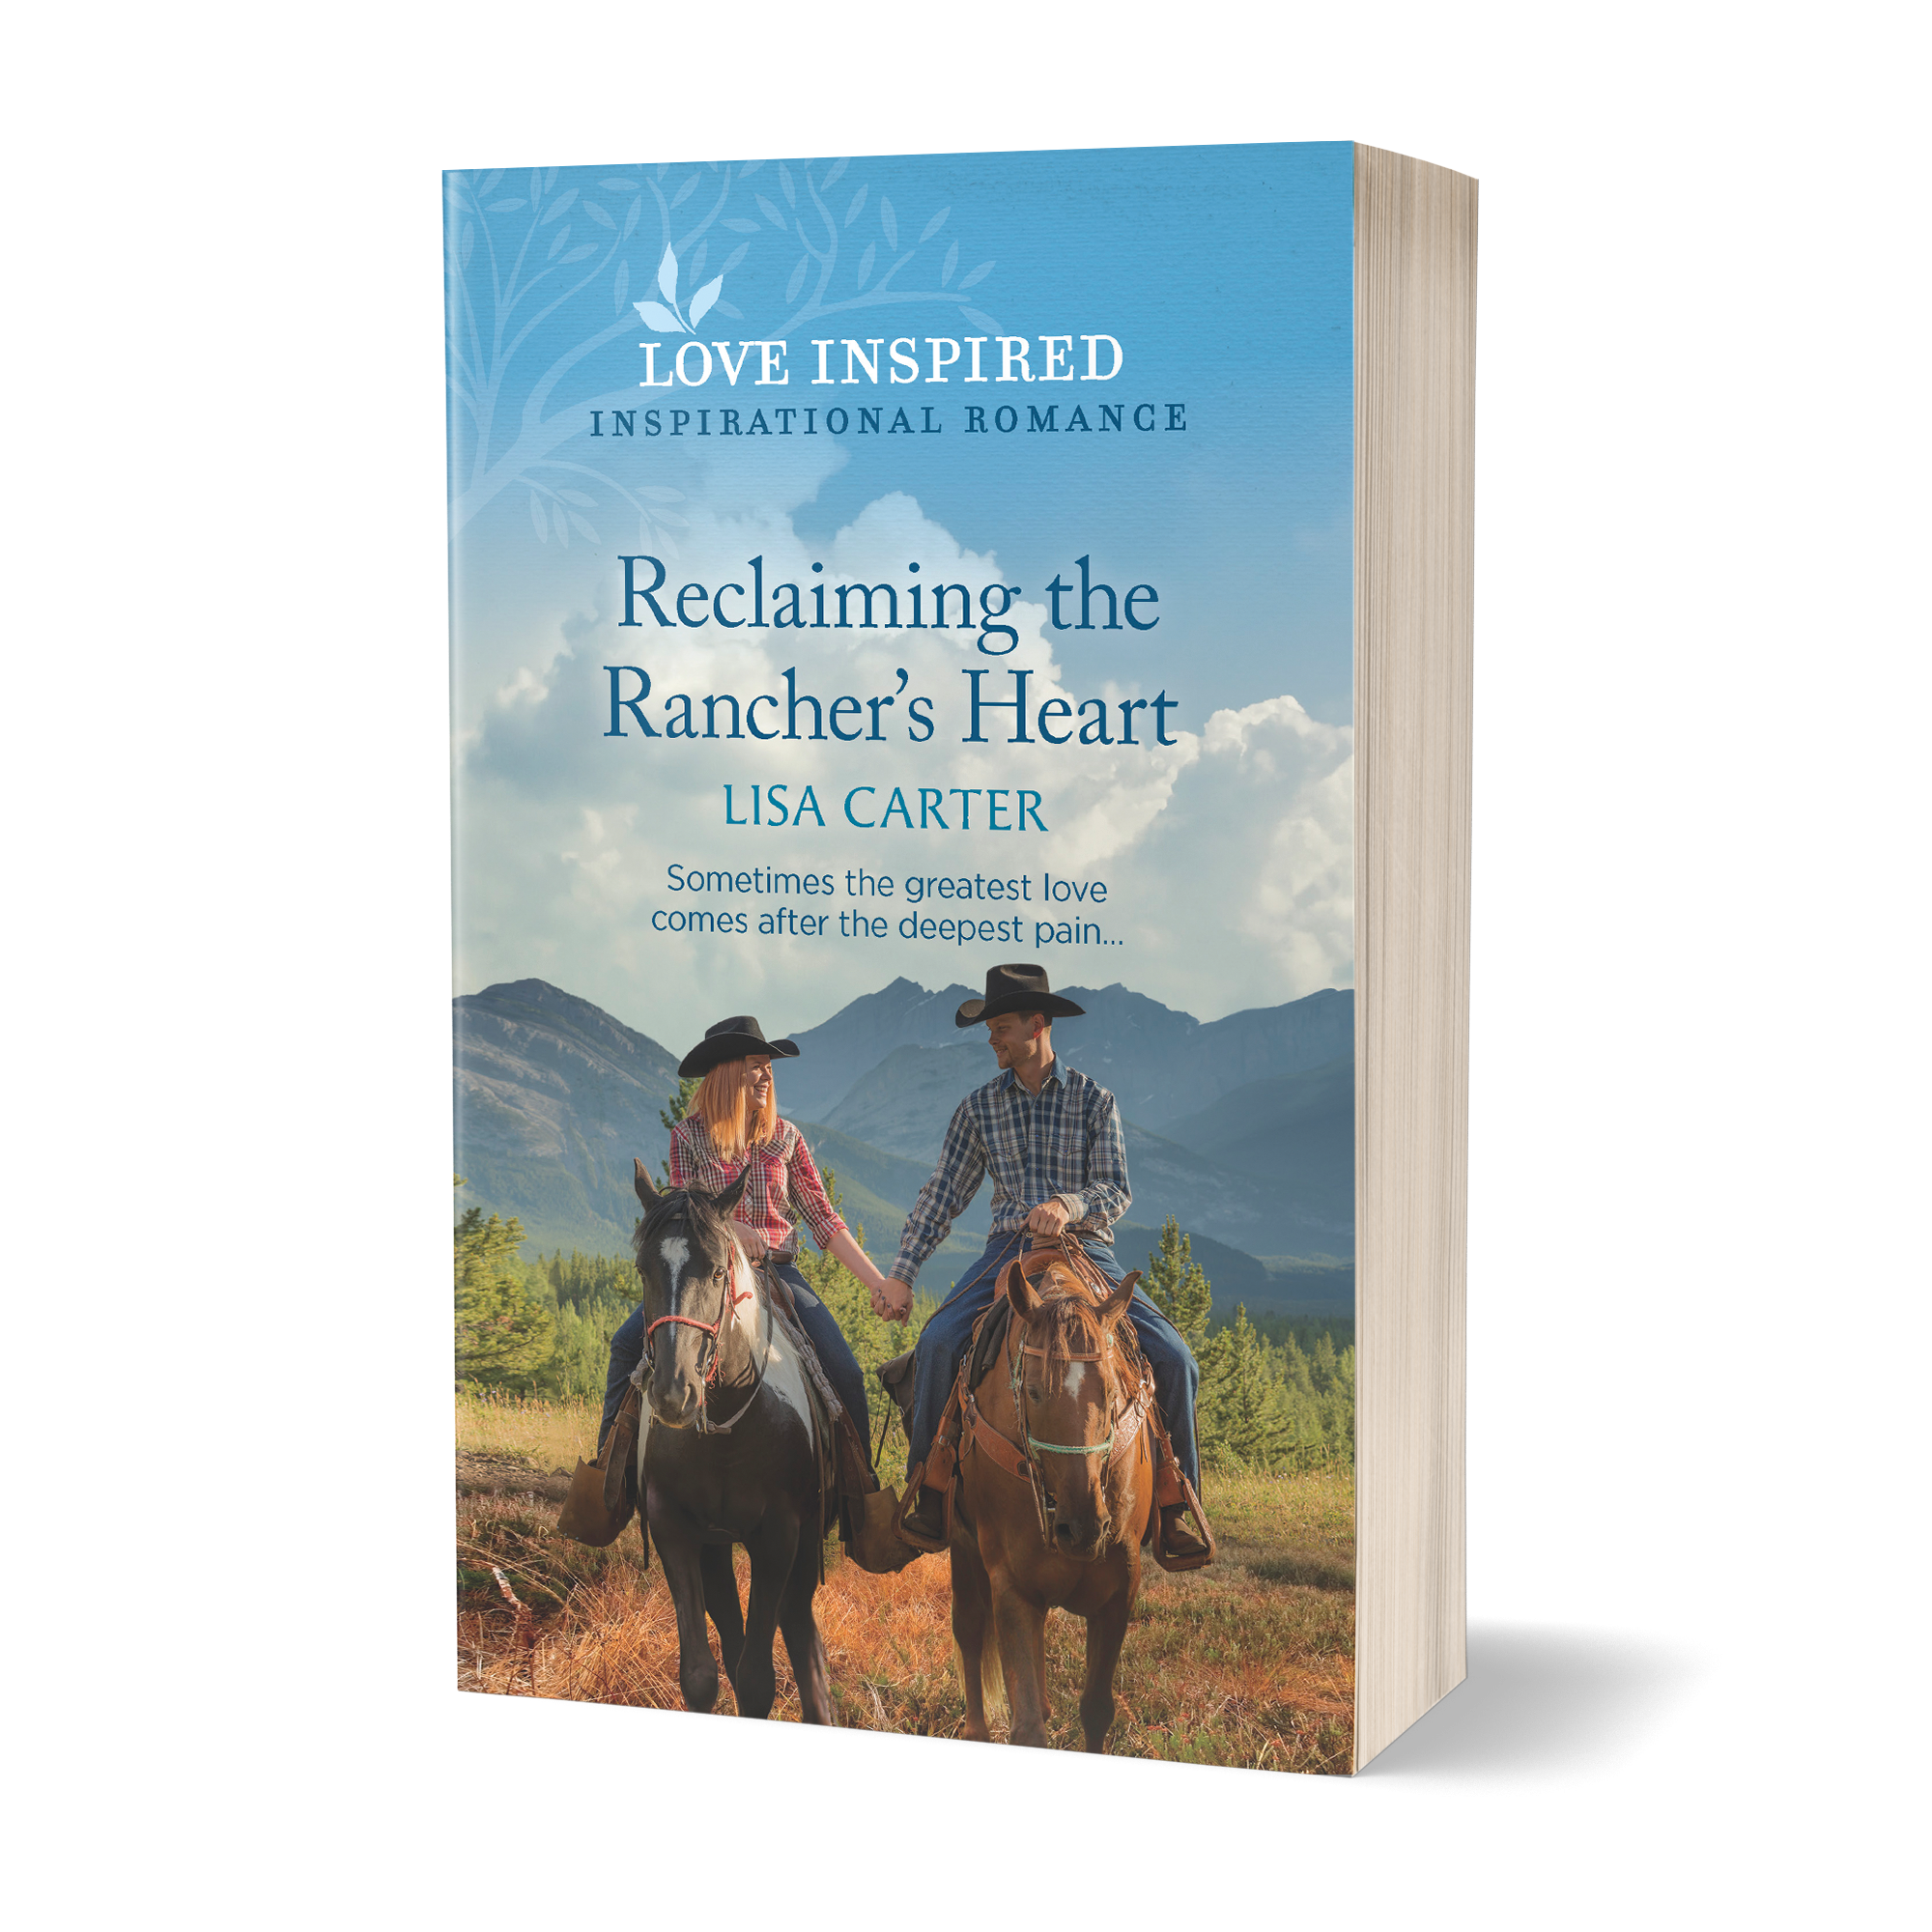  Reclaiming the Rancher’s Heart - Lisa Carter 